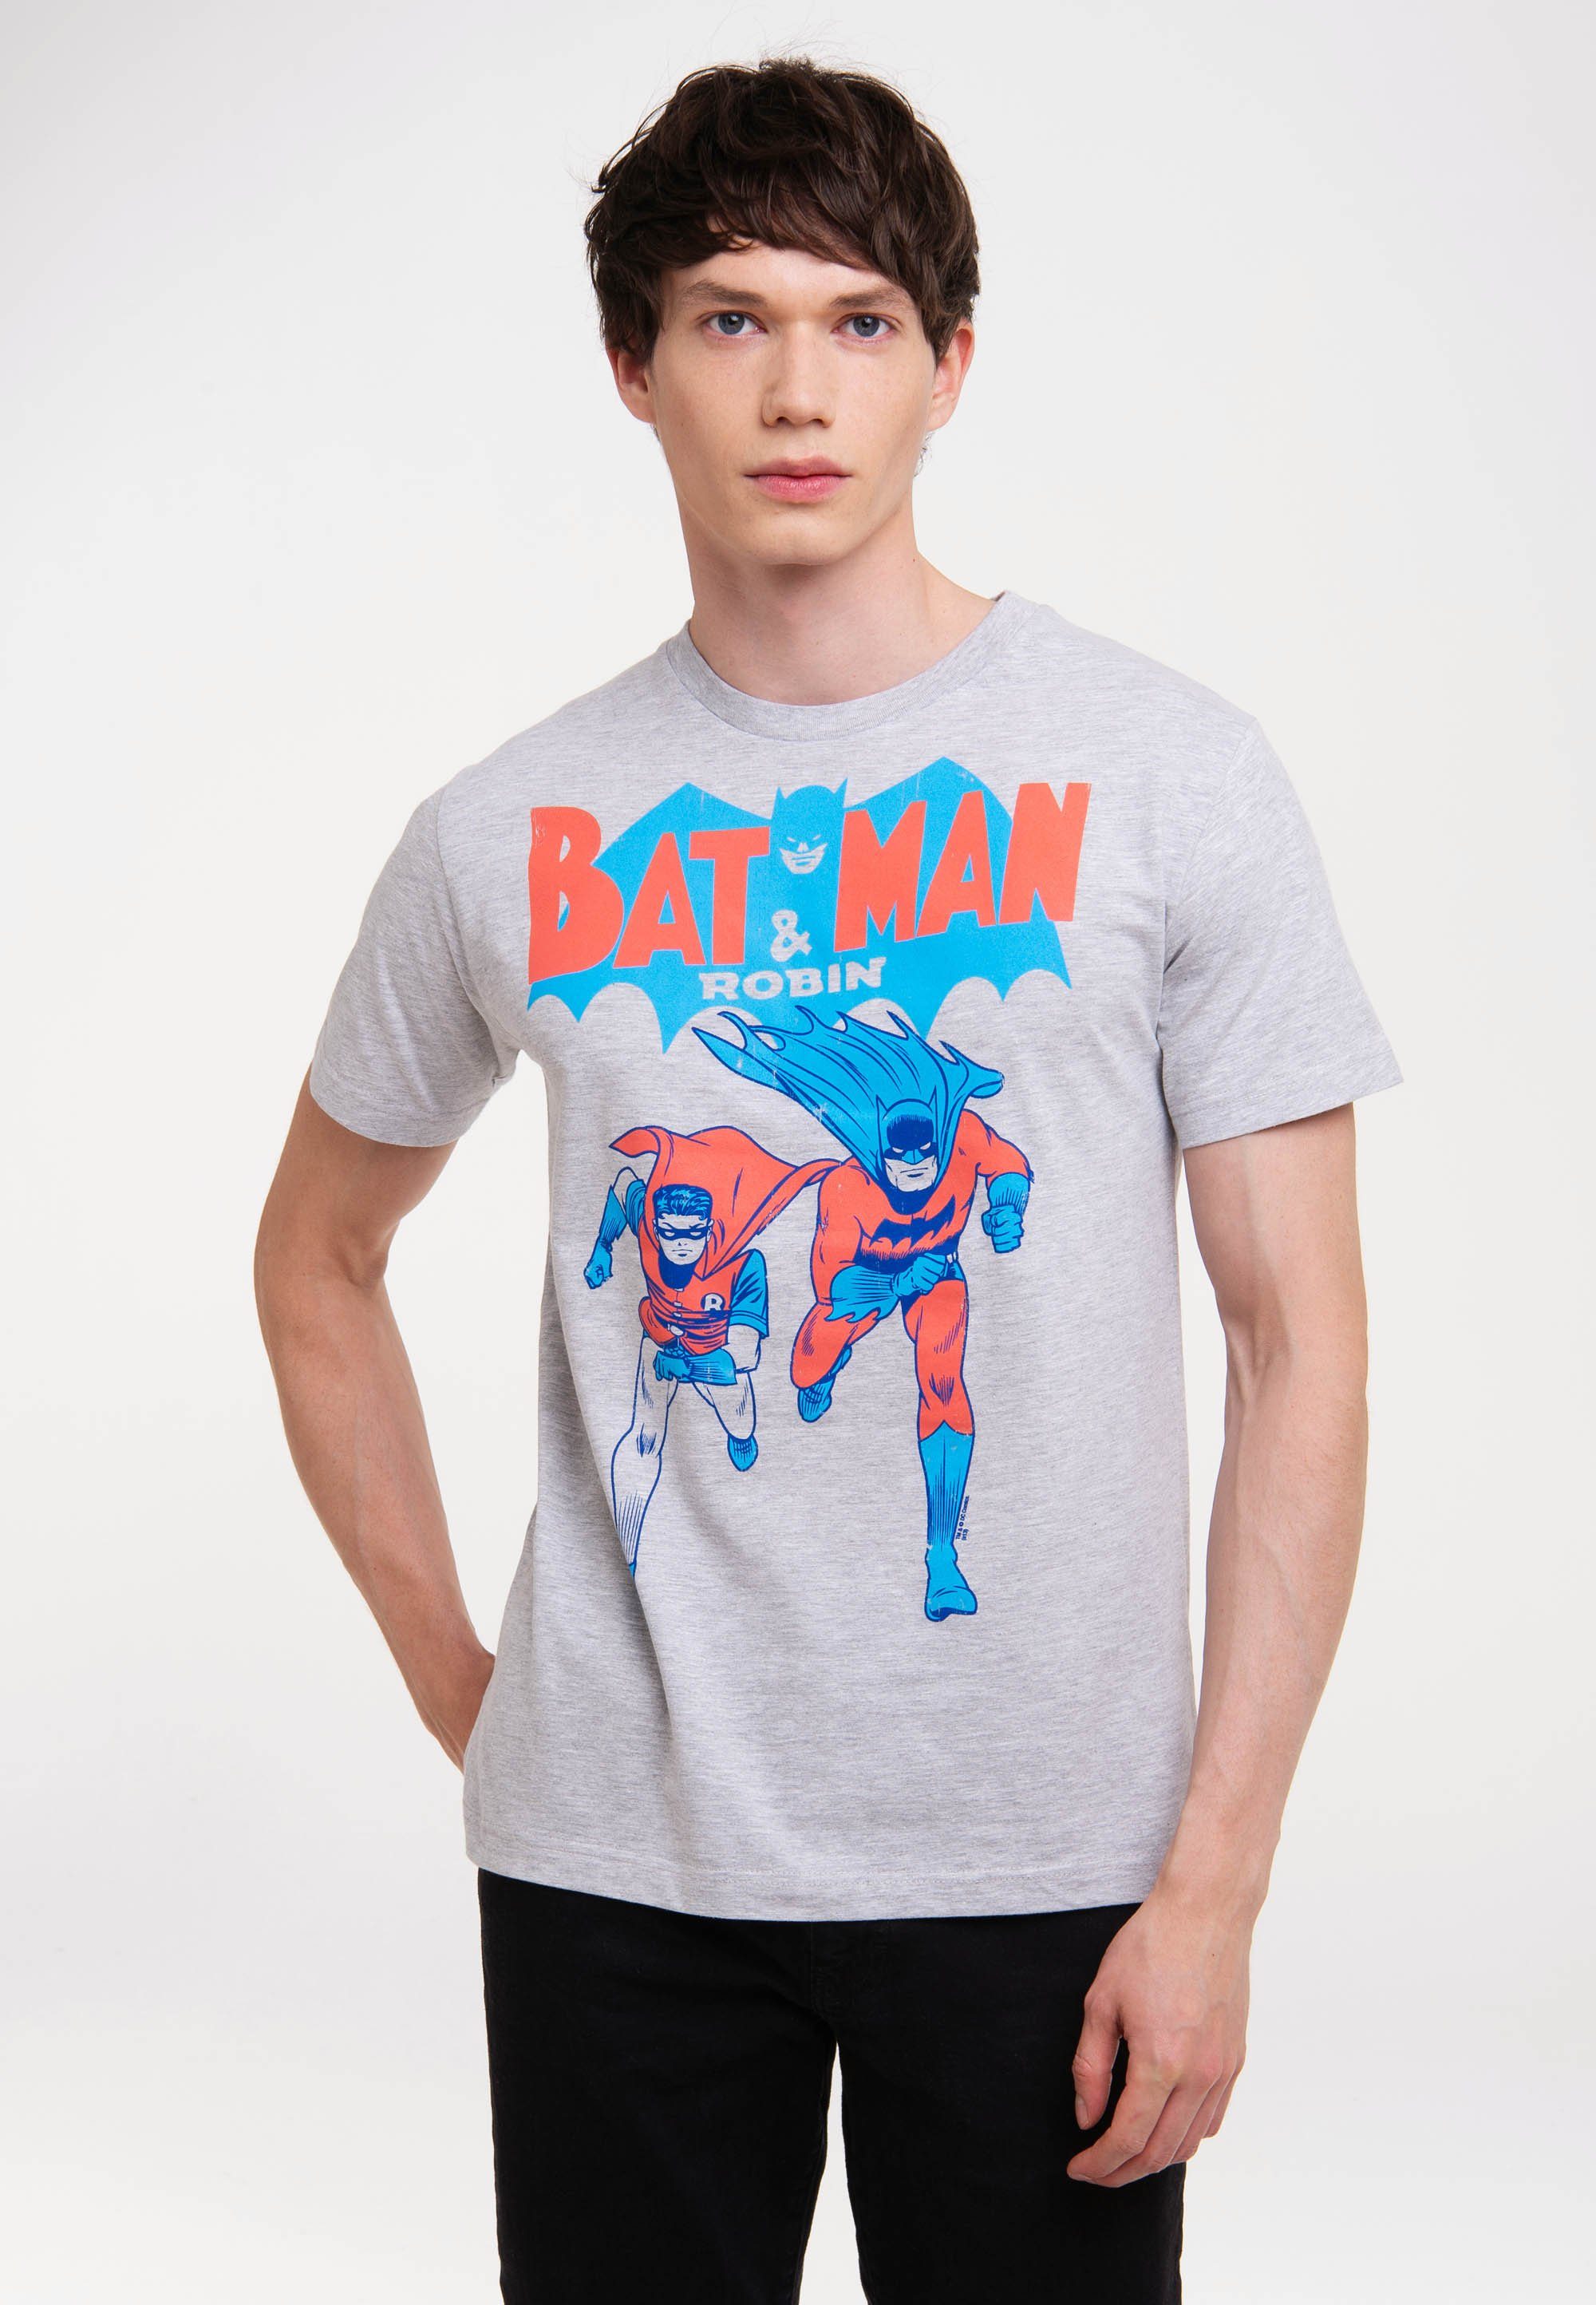 LOGOSHIRT T-Shirt BATMAN AND ROBIN mit coolem Frontprint, Mit hochwertig  langlebigem Siebdruck - Printed in Germany